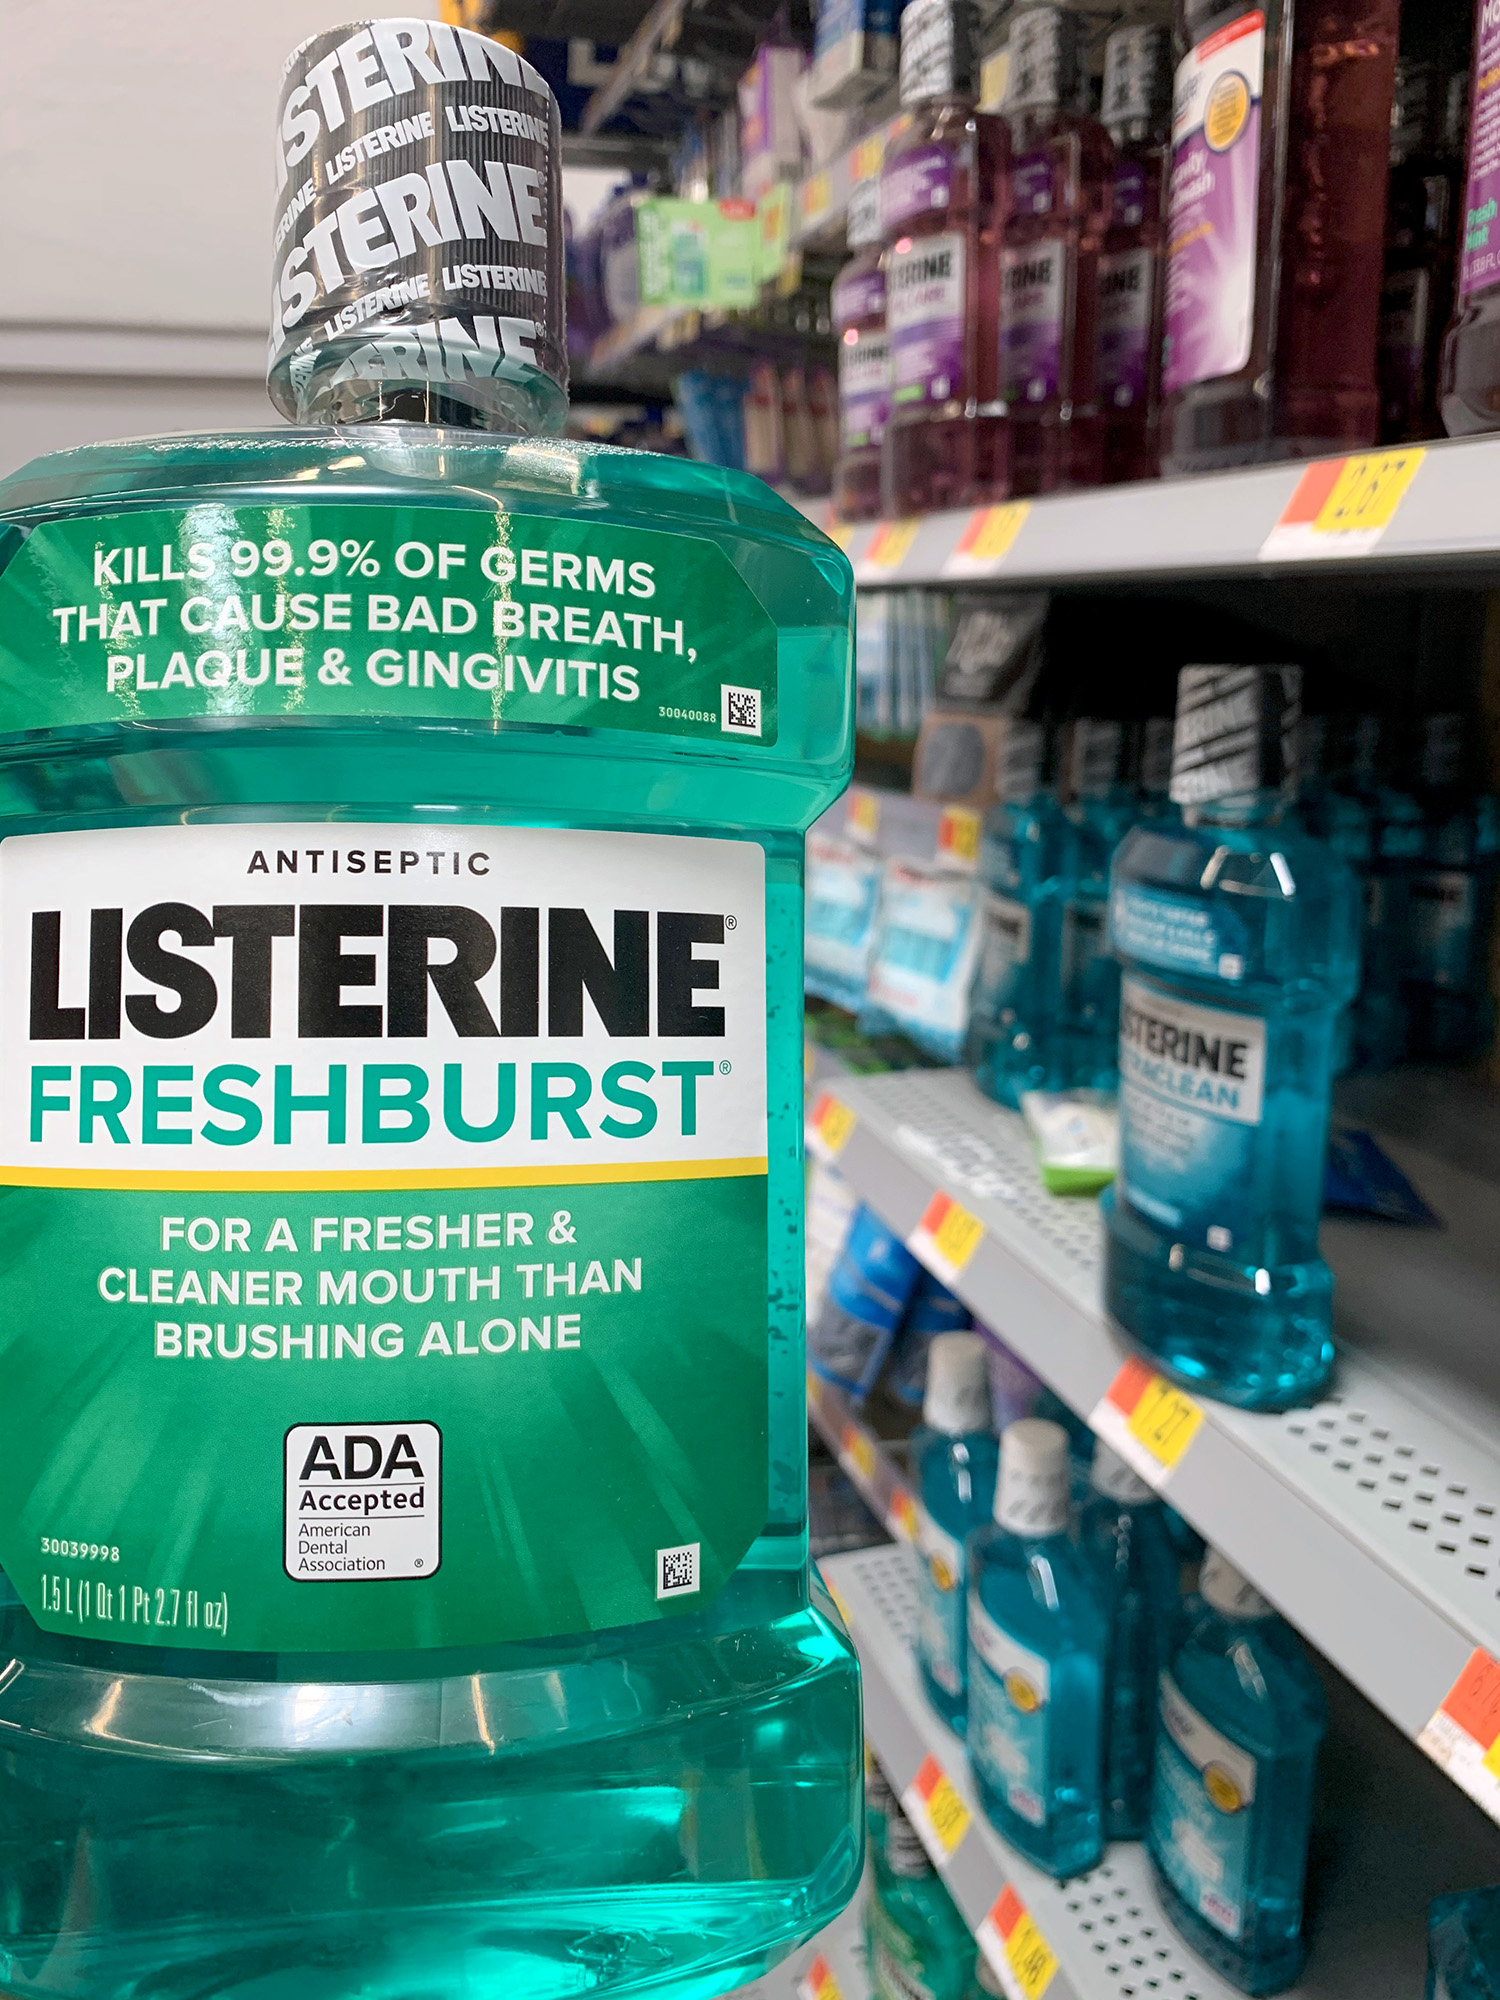 Listerine Antiseptic Freshburst 1.5L